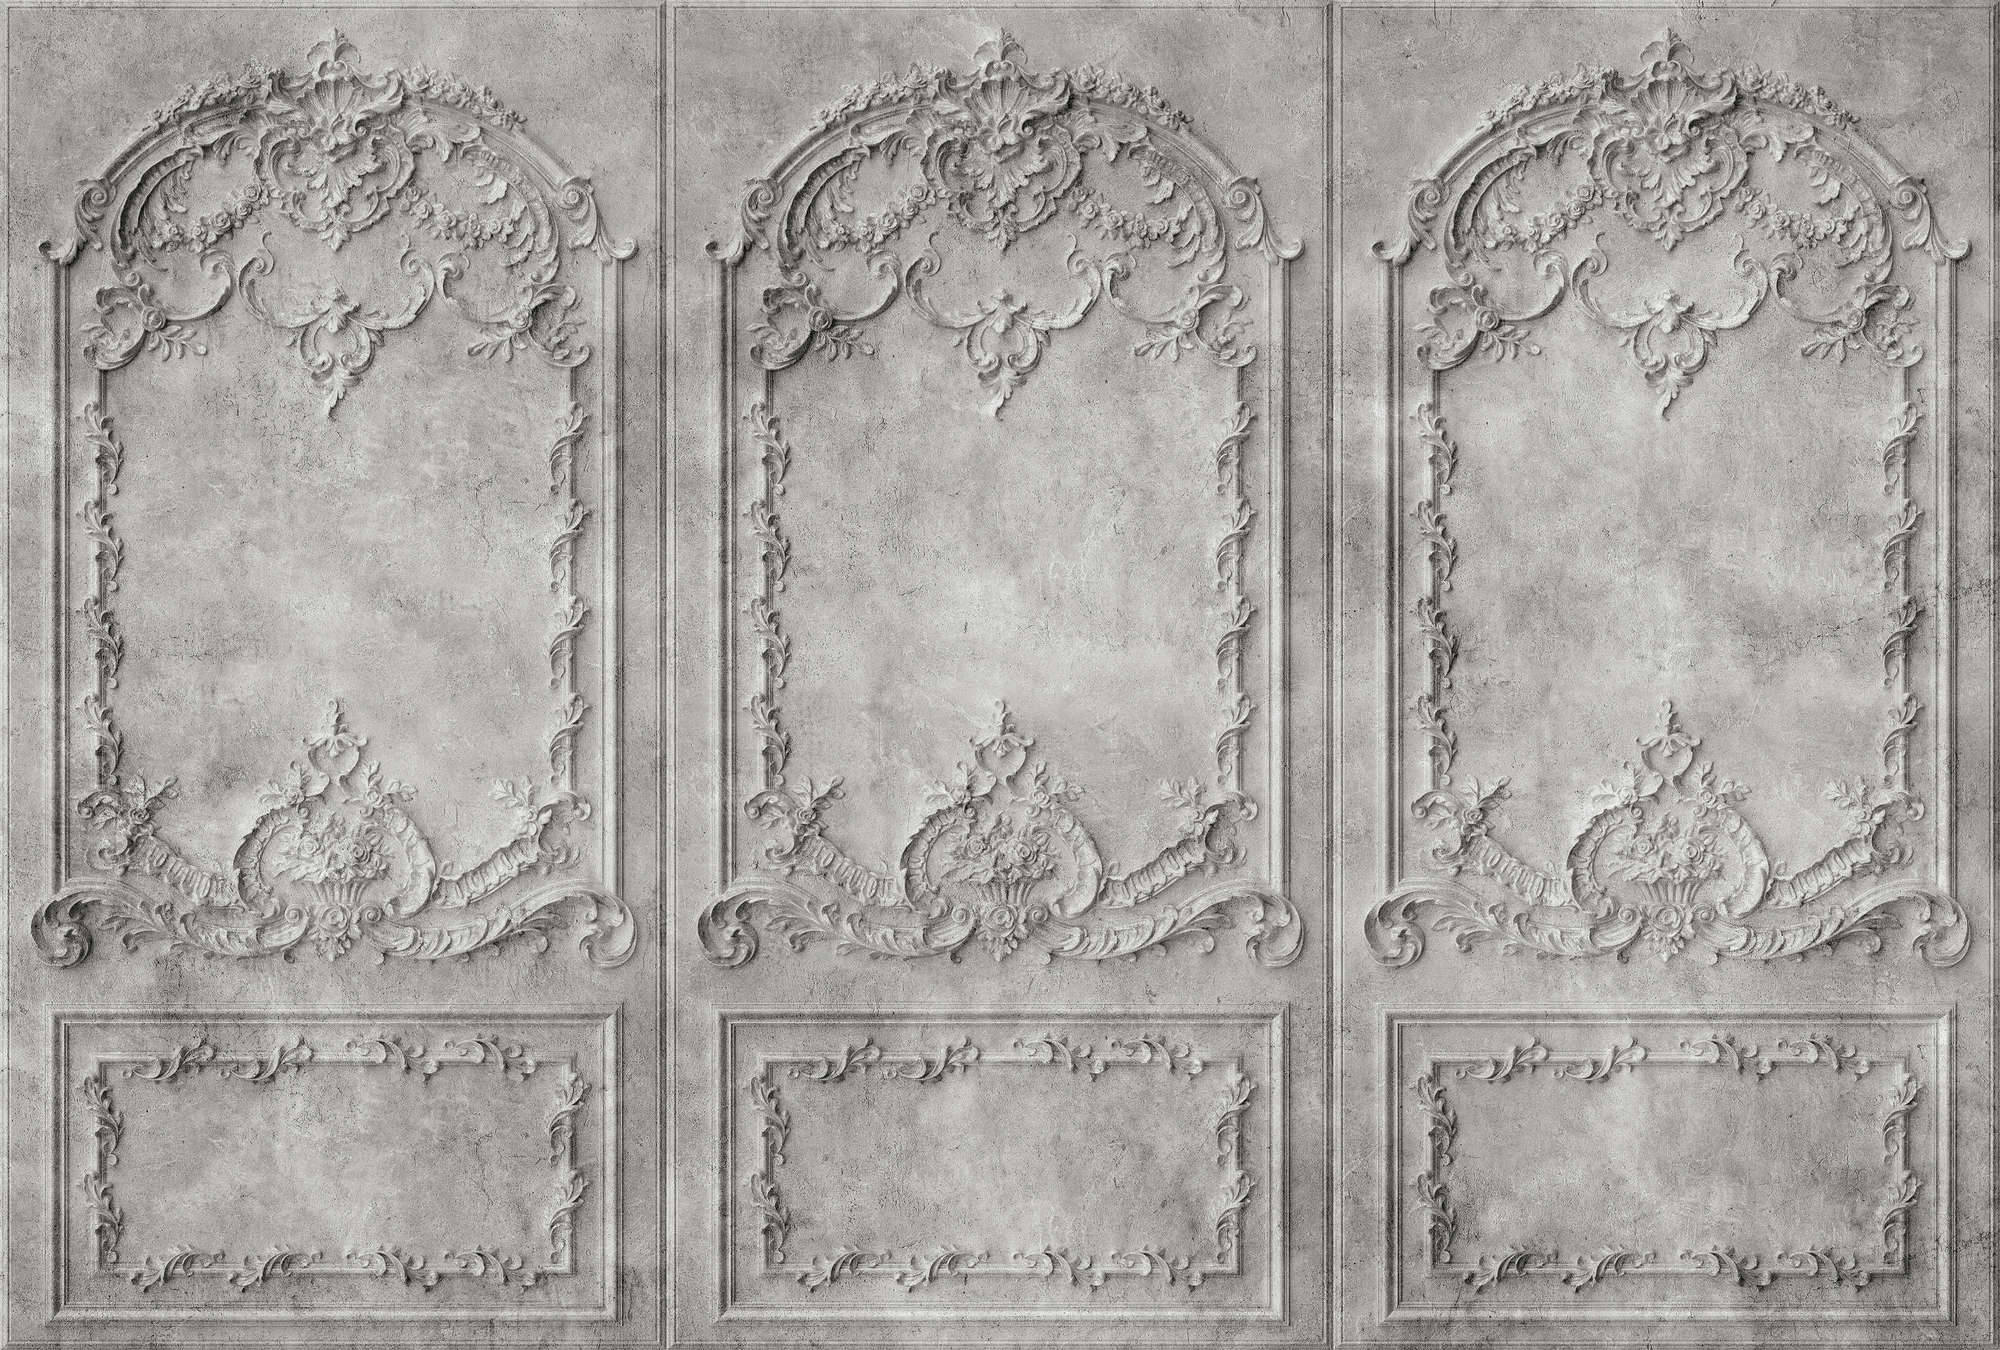             Versailles 2 – Fototapete Holz-Paneele Grau im Barock Stil
        